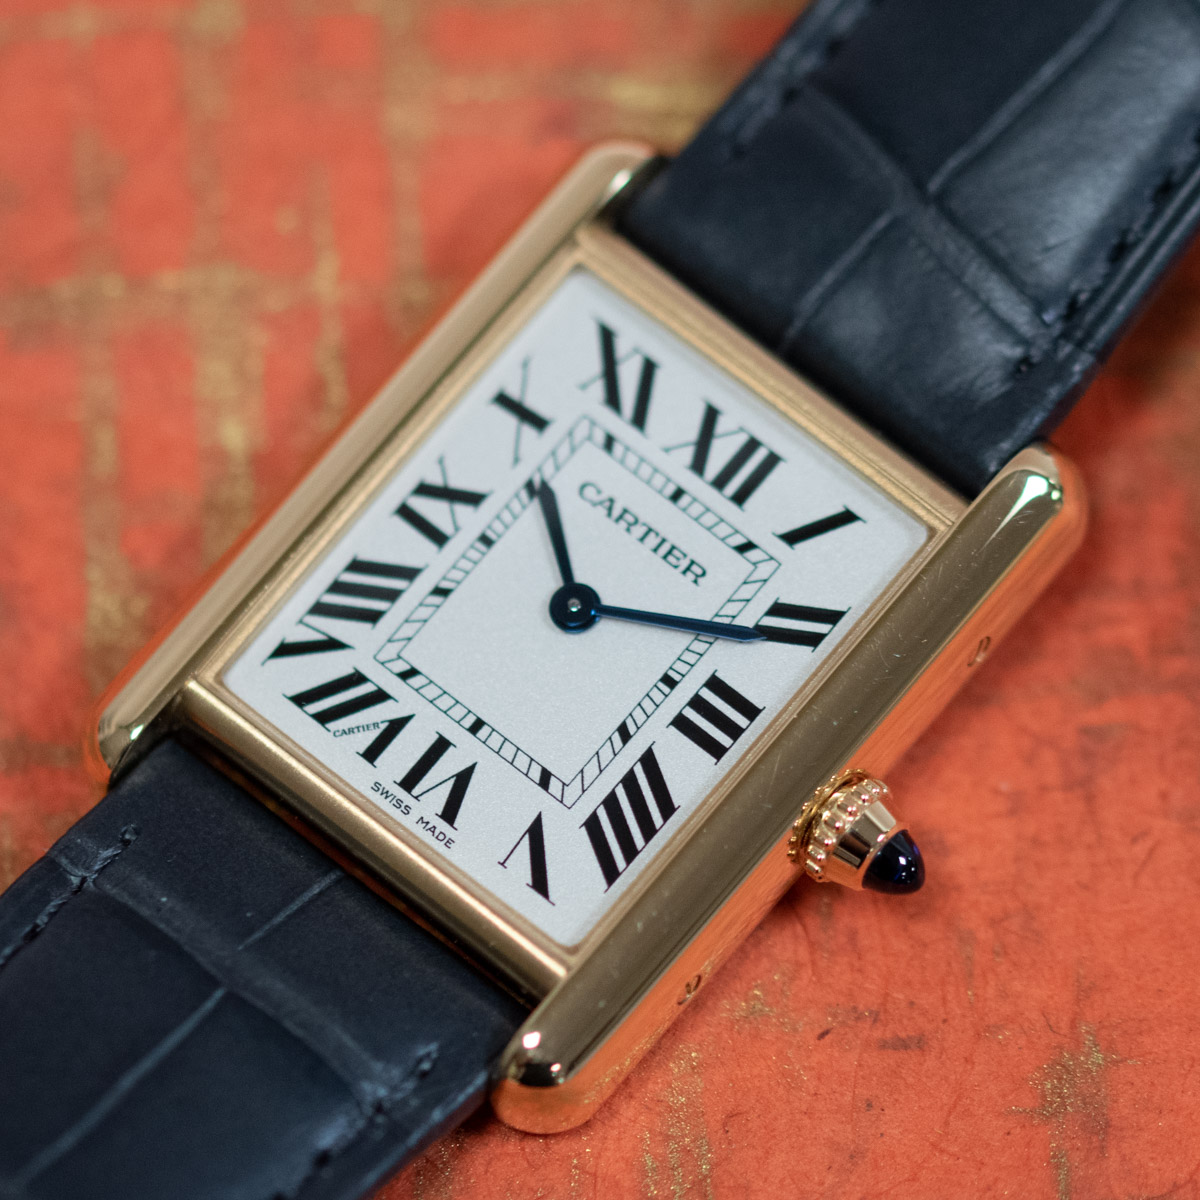 CRWGTA0067 - Tank Louis Cartier watch - Large model, quartz